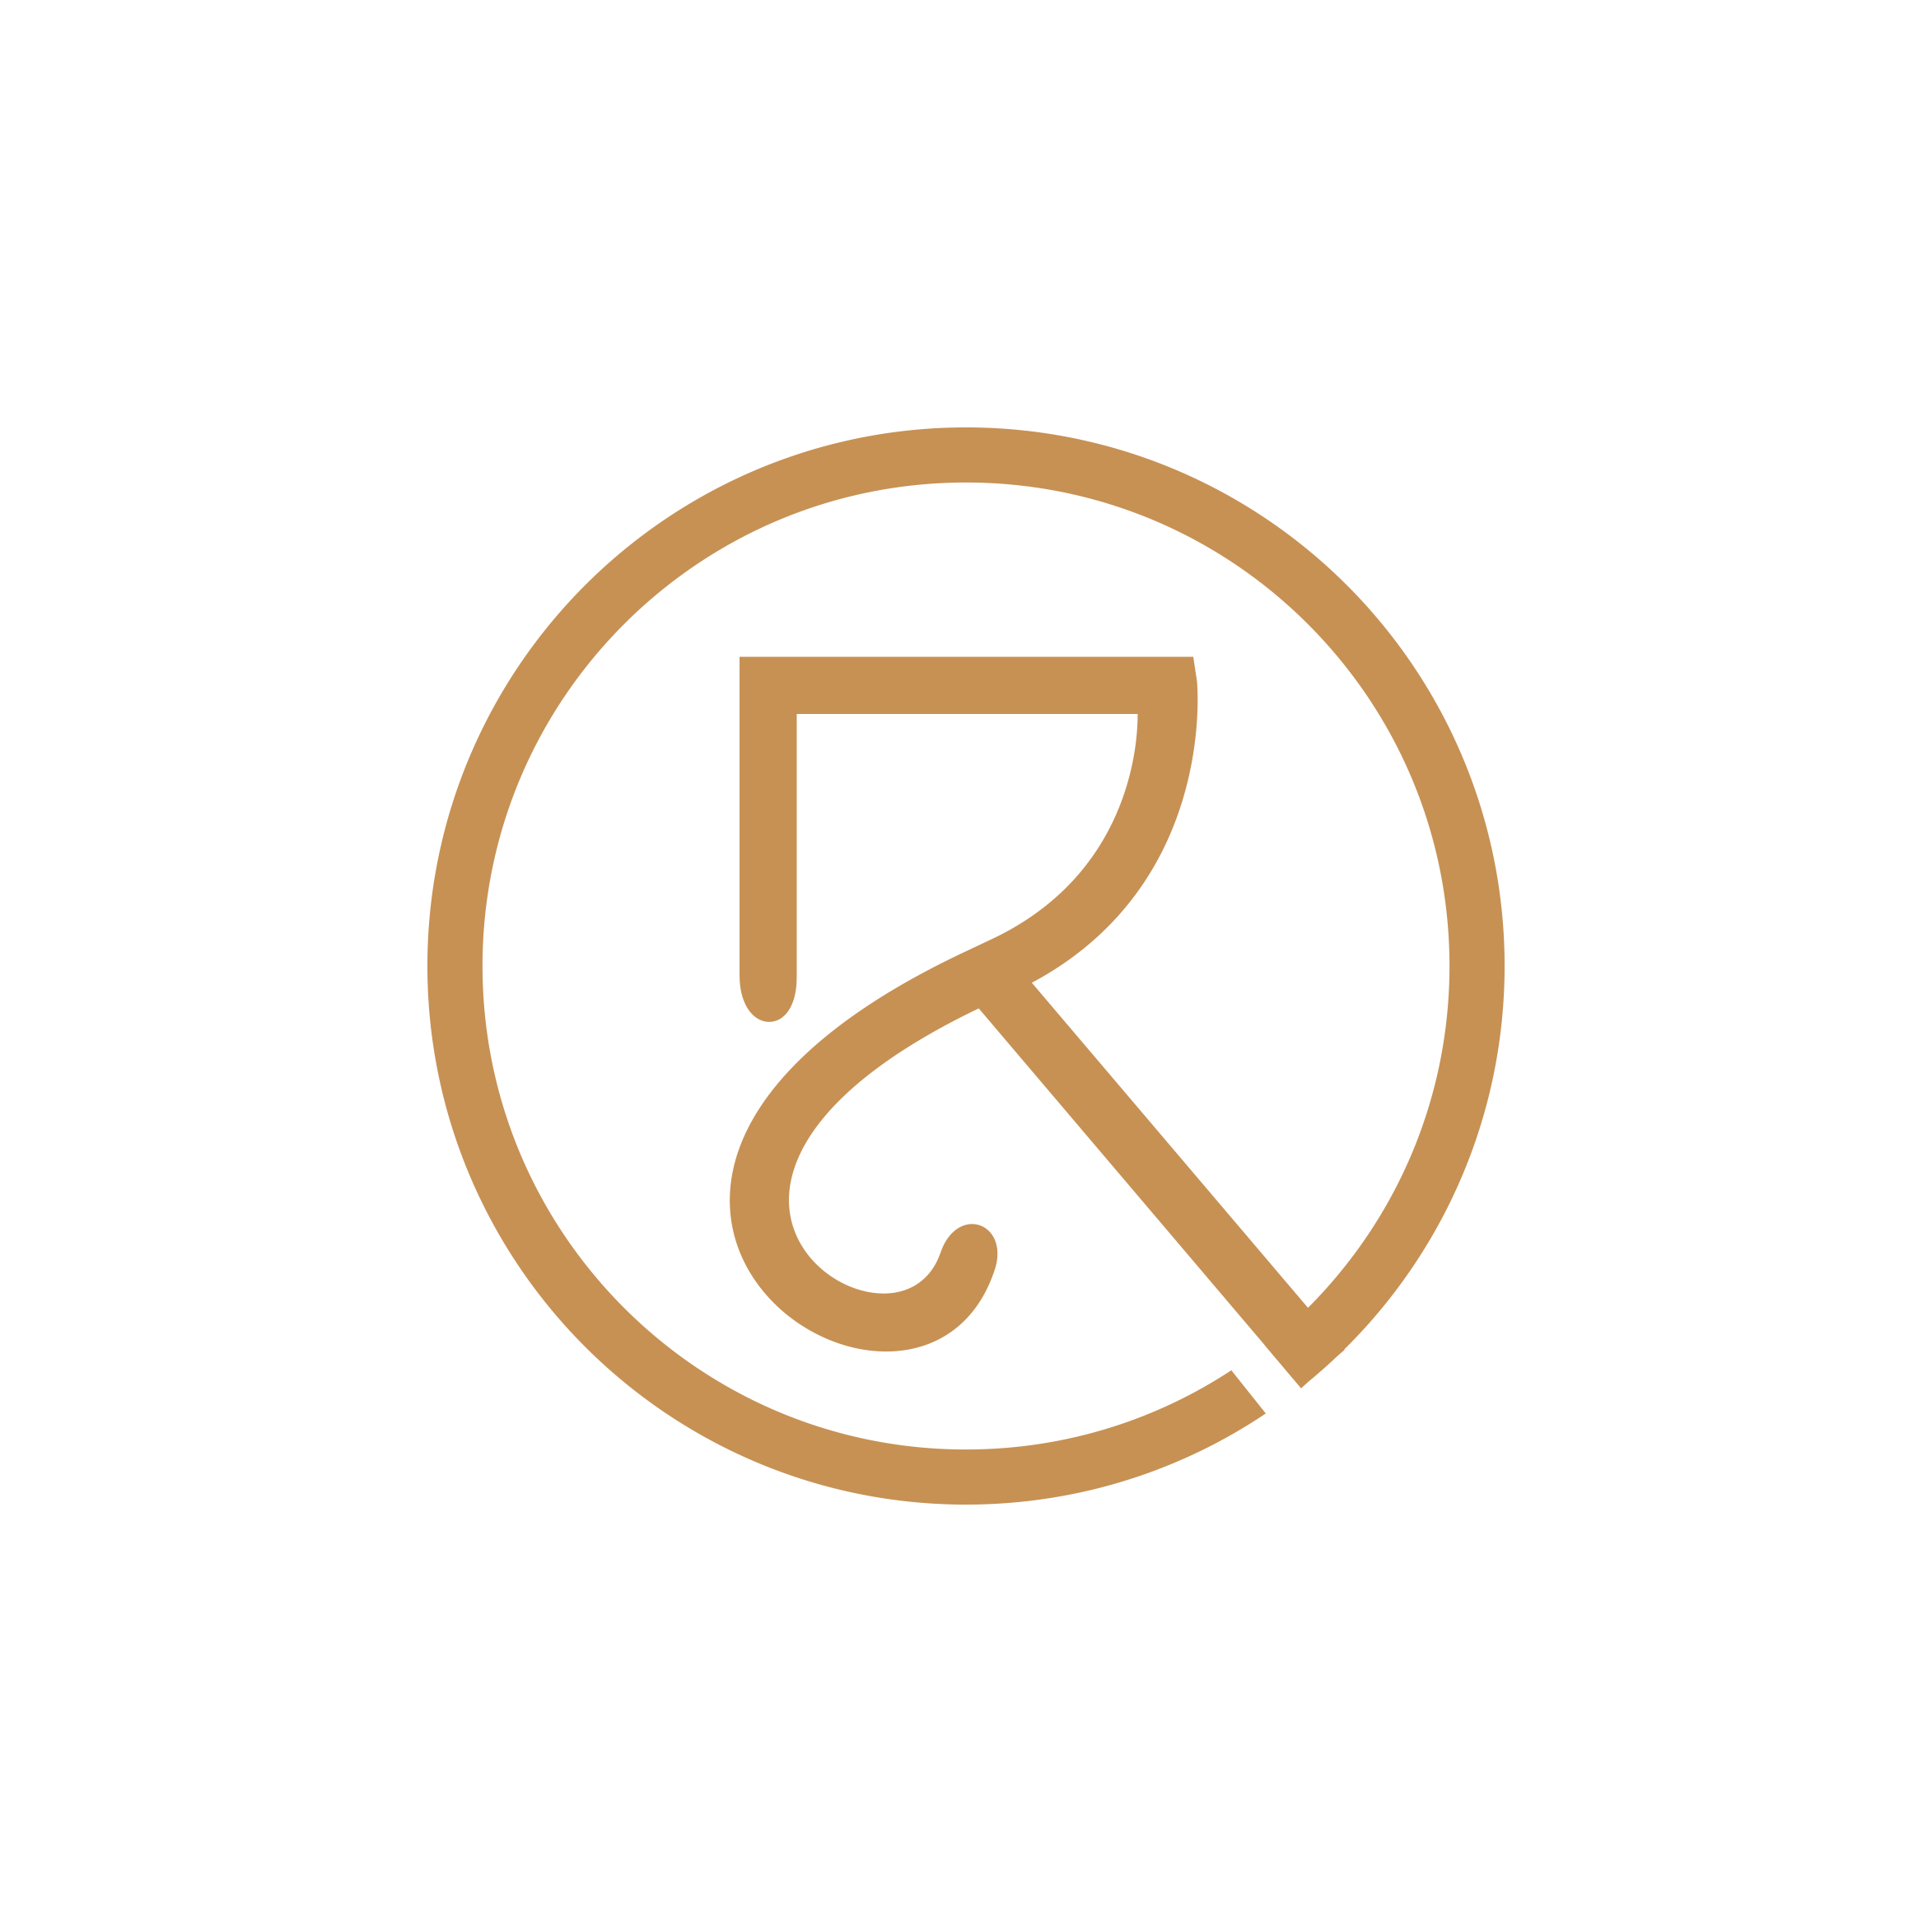 Realty Design Logo